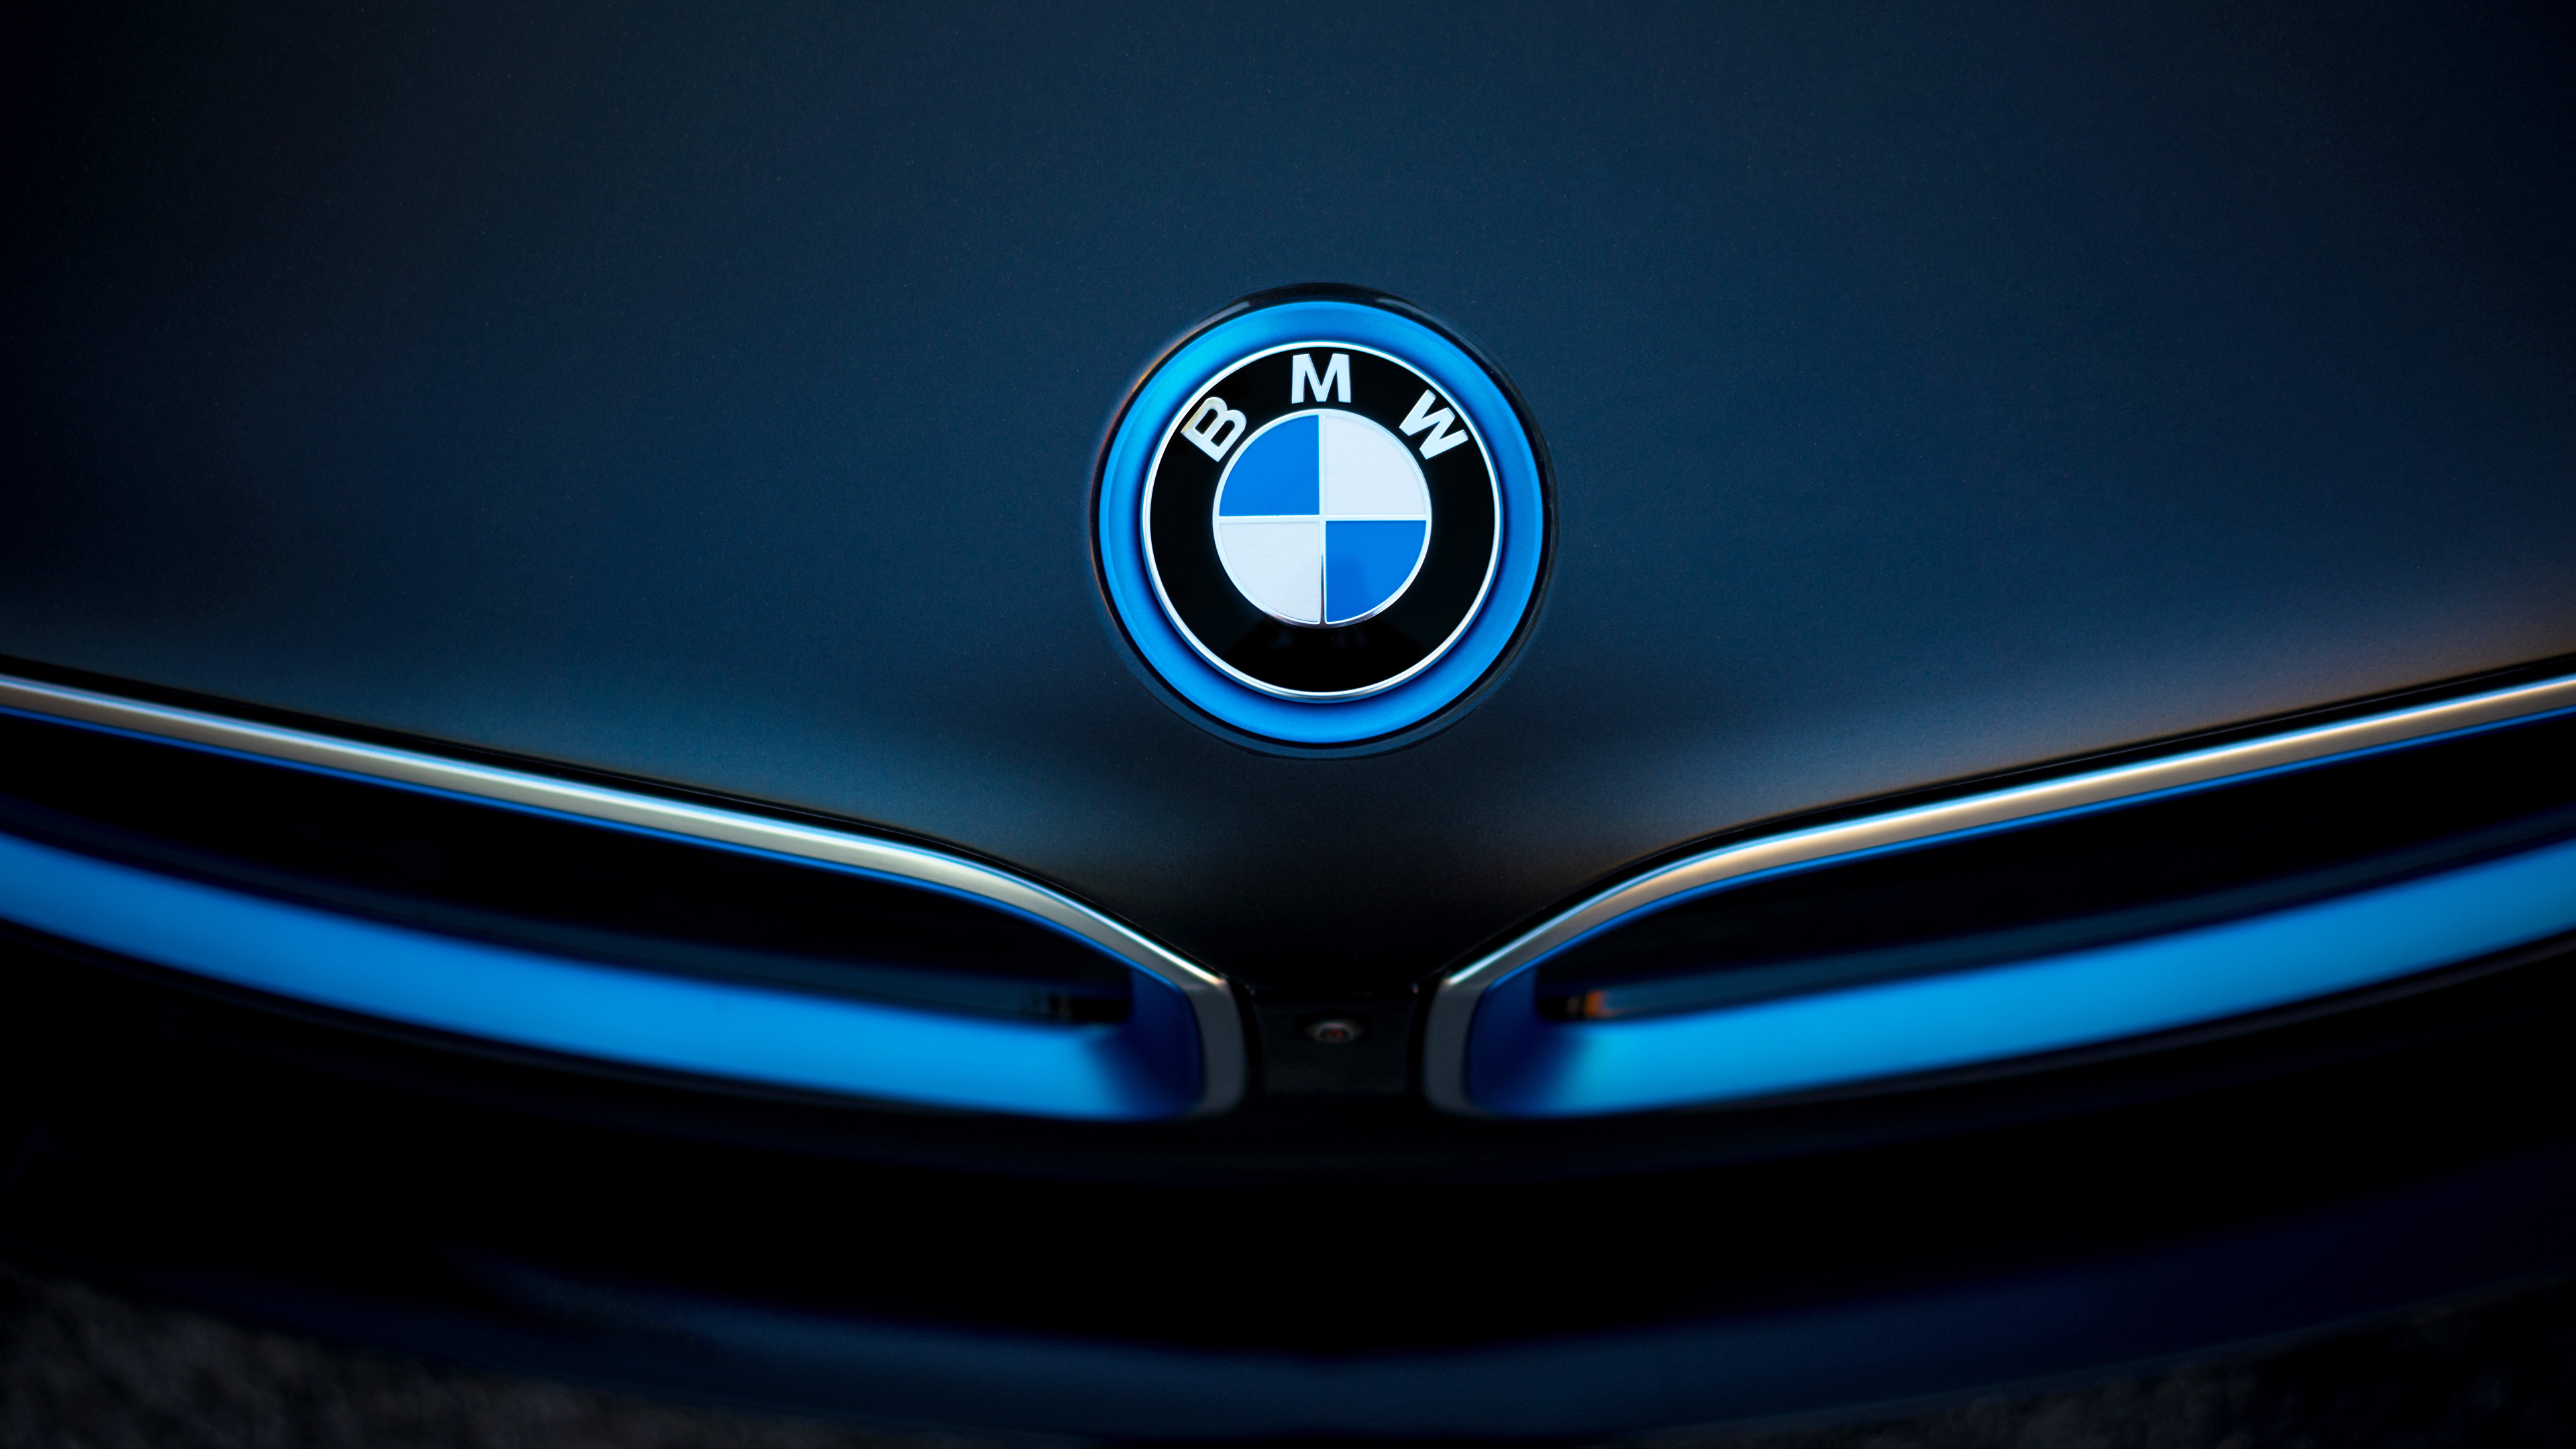 3840x2160 BMW Logo Wallpaper : Find best latest BMW Logo Wallpaper in HD for your PC desktop  background & mobile phones. | Brands and Logo's | Pinterest | Bmw logo, ...